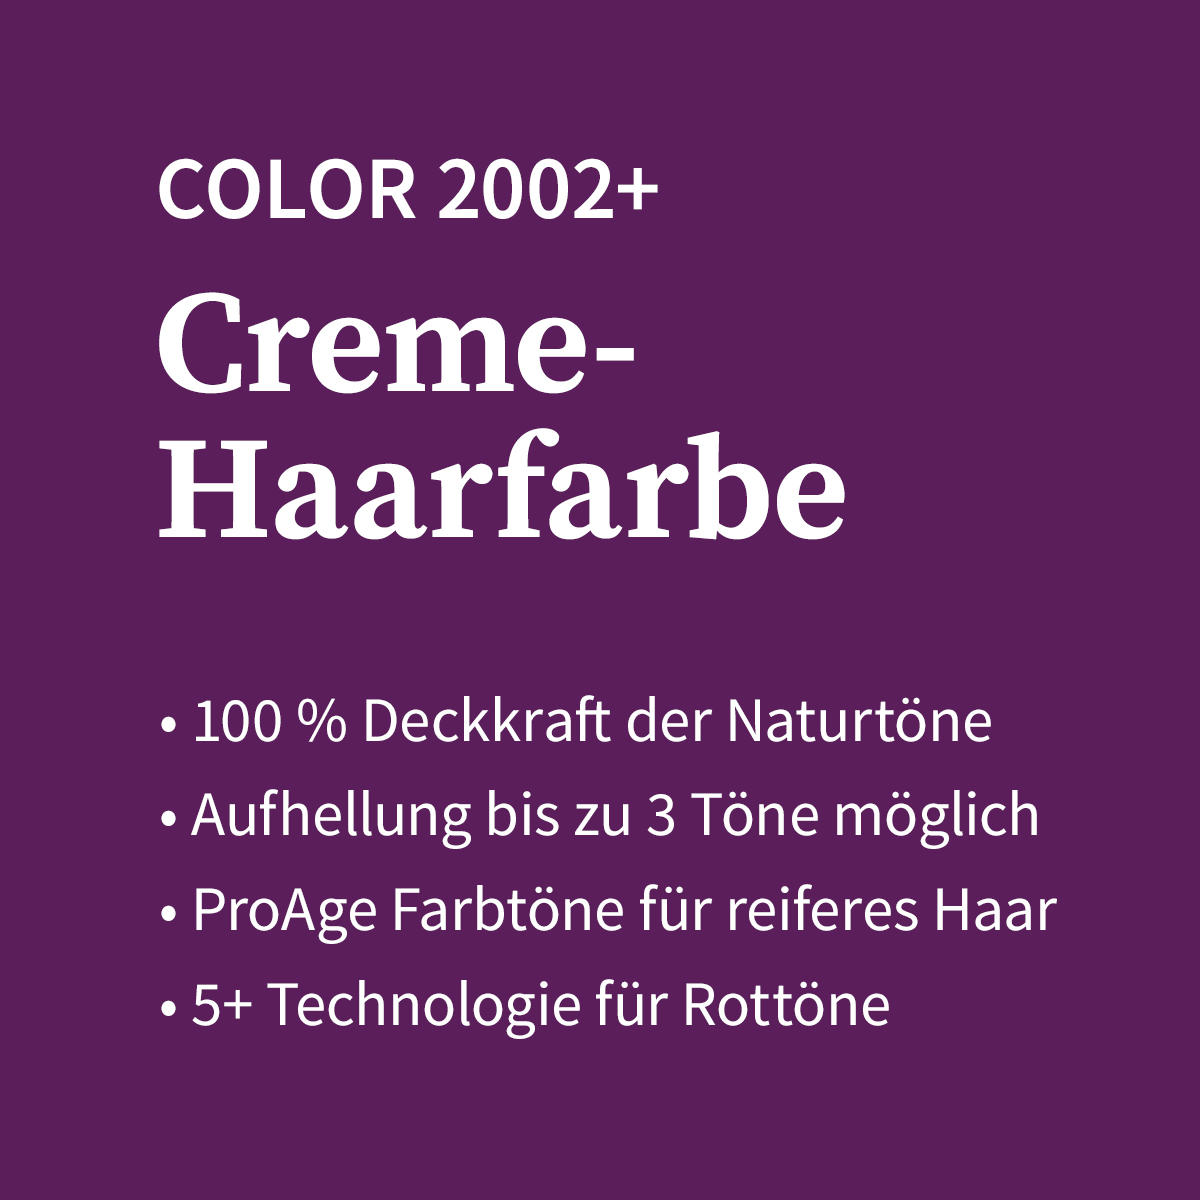 Basler Color 2002+ Cremehaarfarbe 6/44 dunkelblond rot intensiv, Tube 60 ml - 4